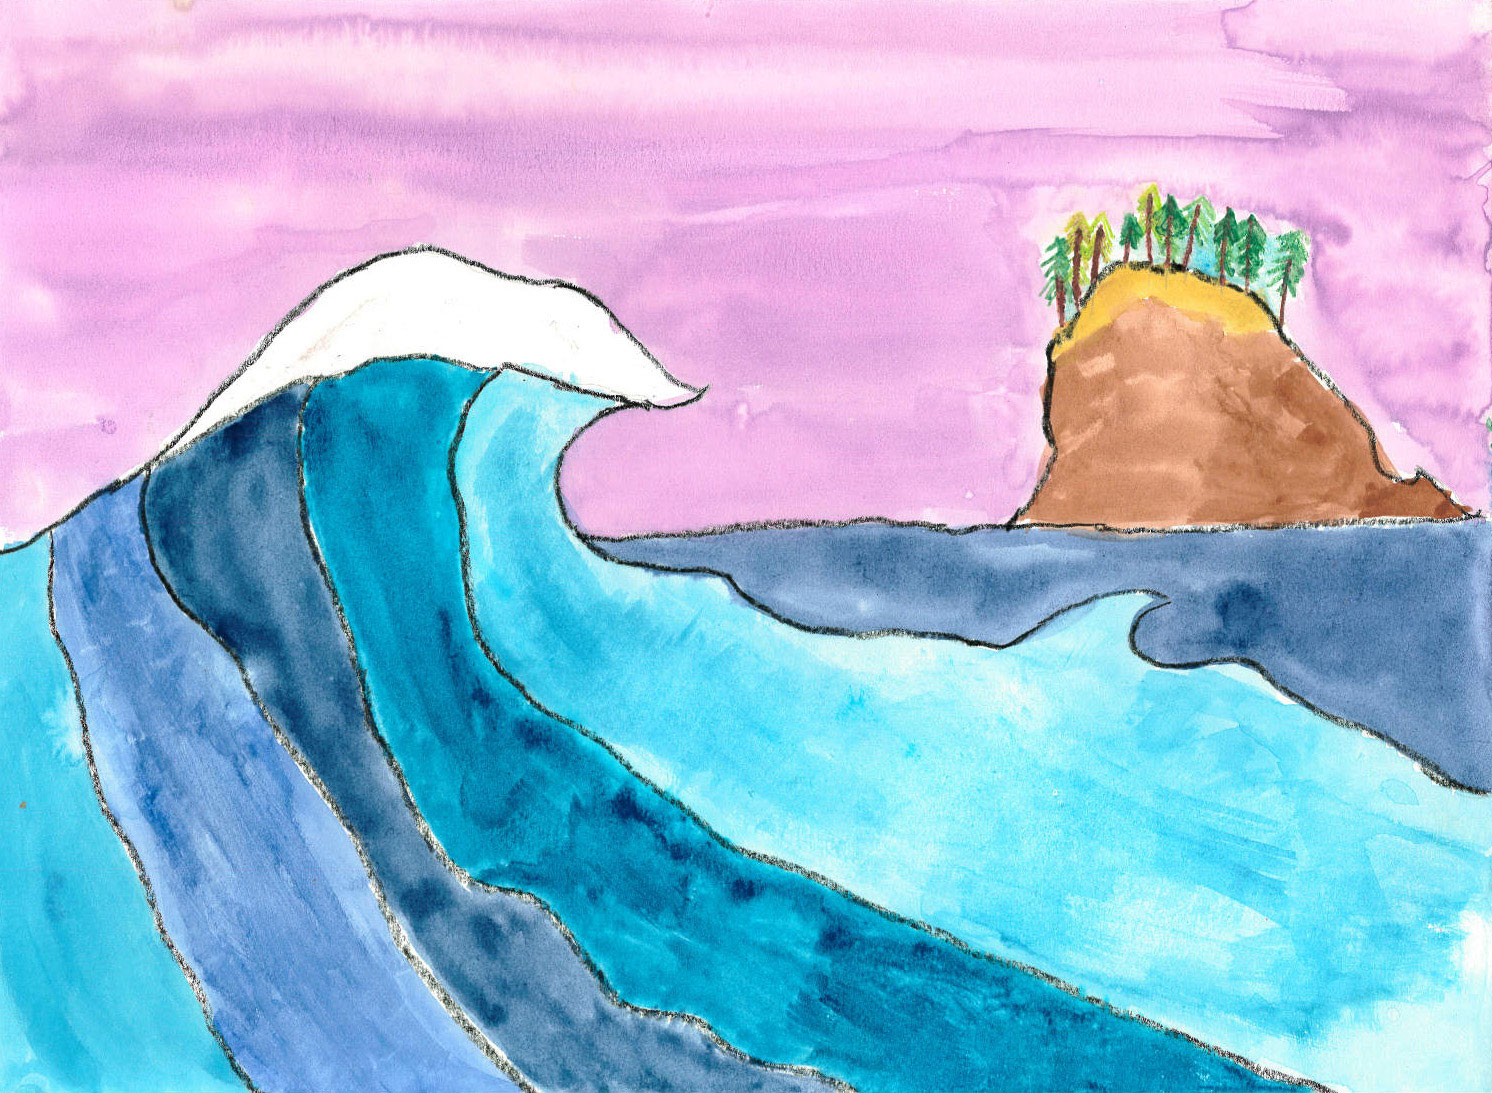 Big wave with Trinidad Head in background, in watercolor and crayon